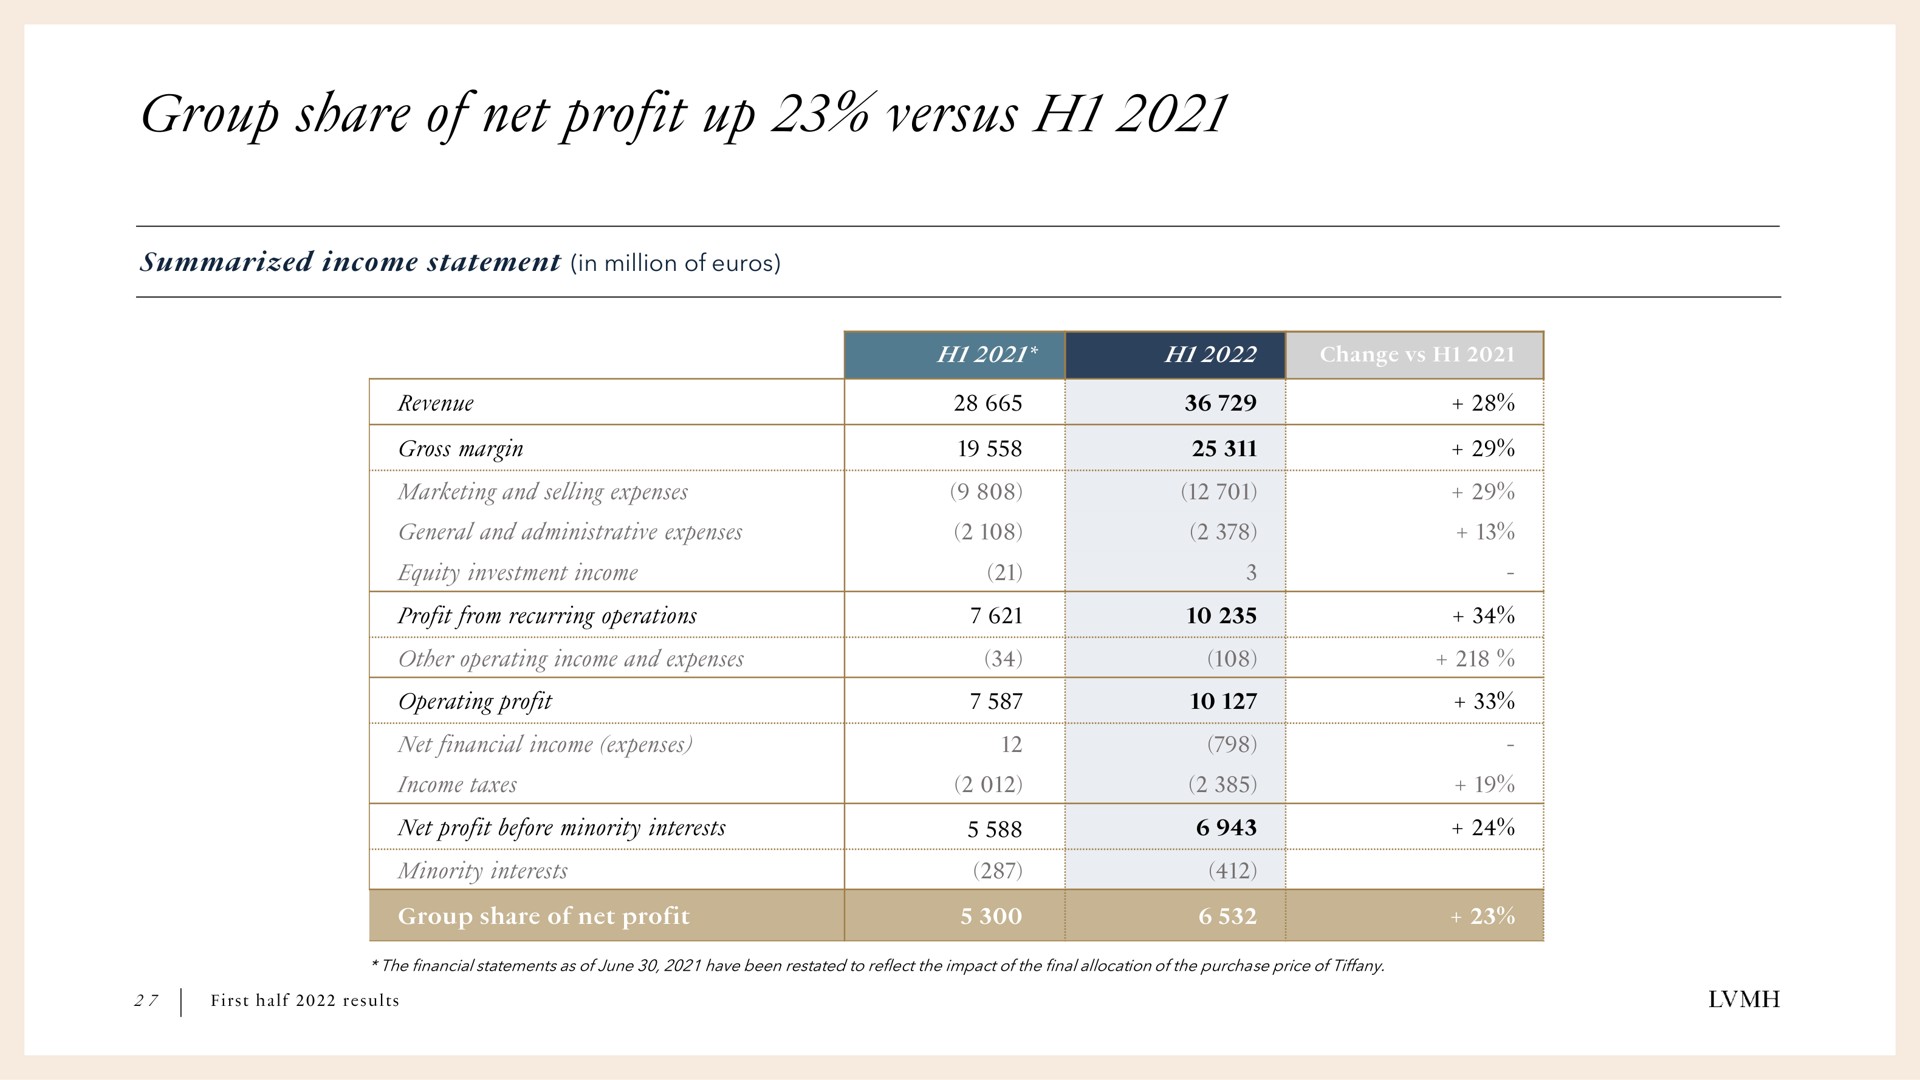 group share of net profit up versus | LVMH